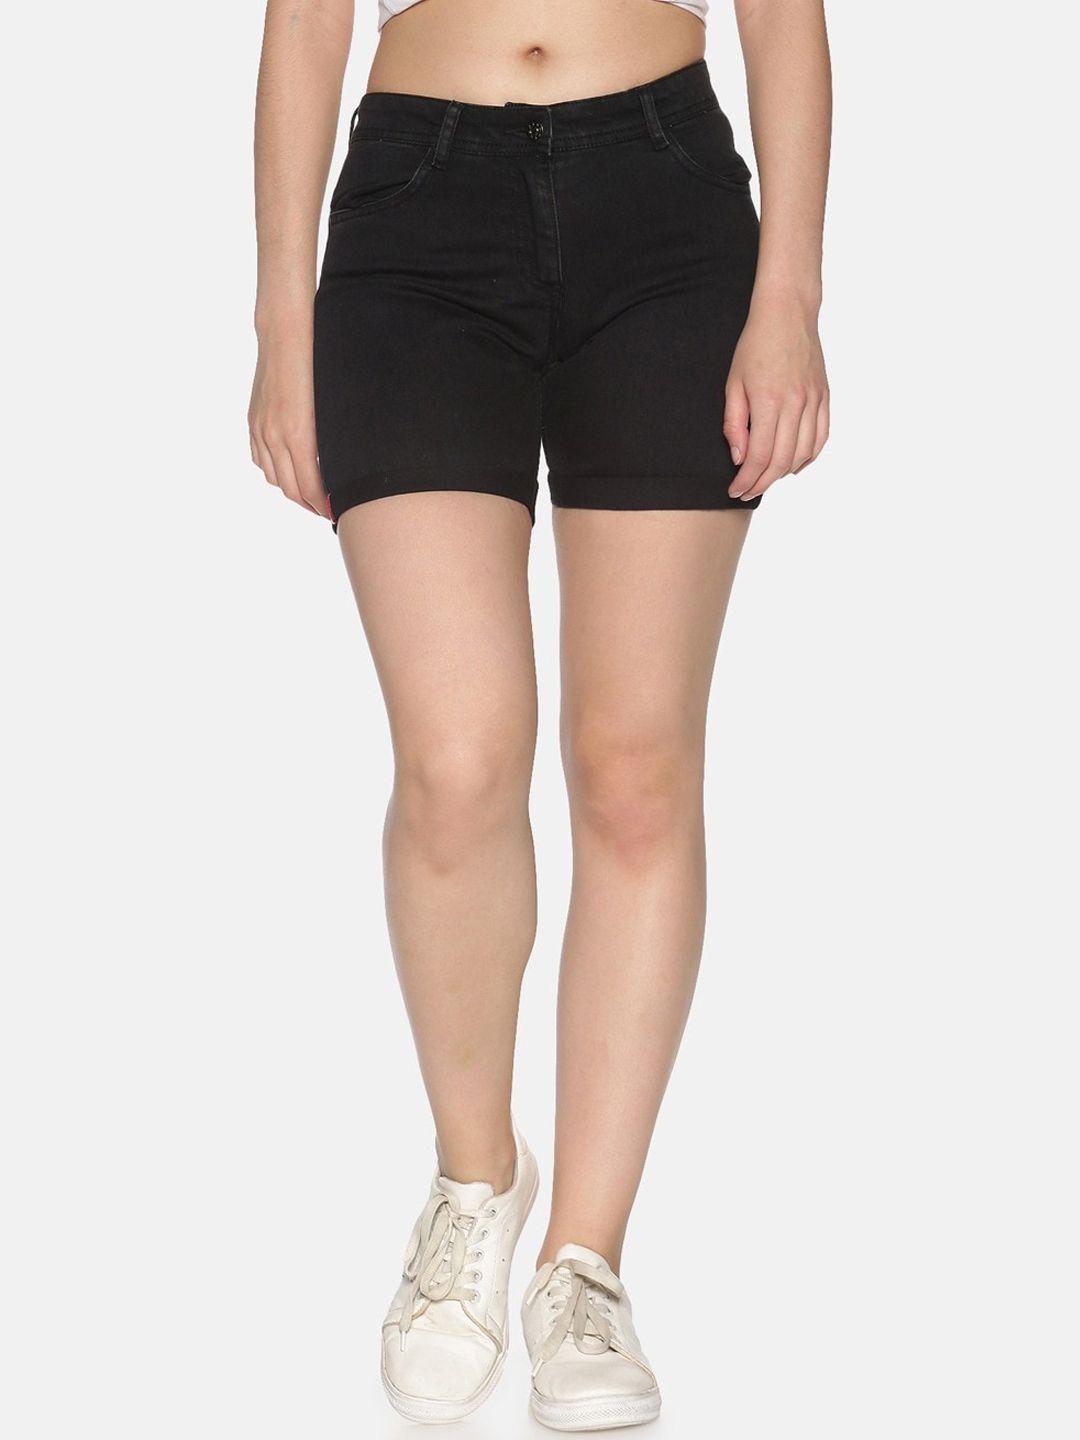 twin birds women mid-rise skinny fit cotton denim shorts